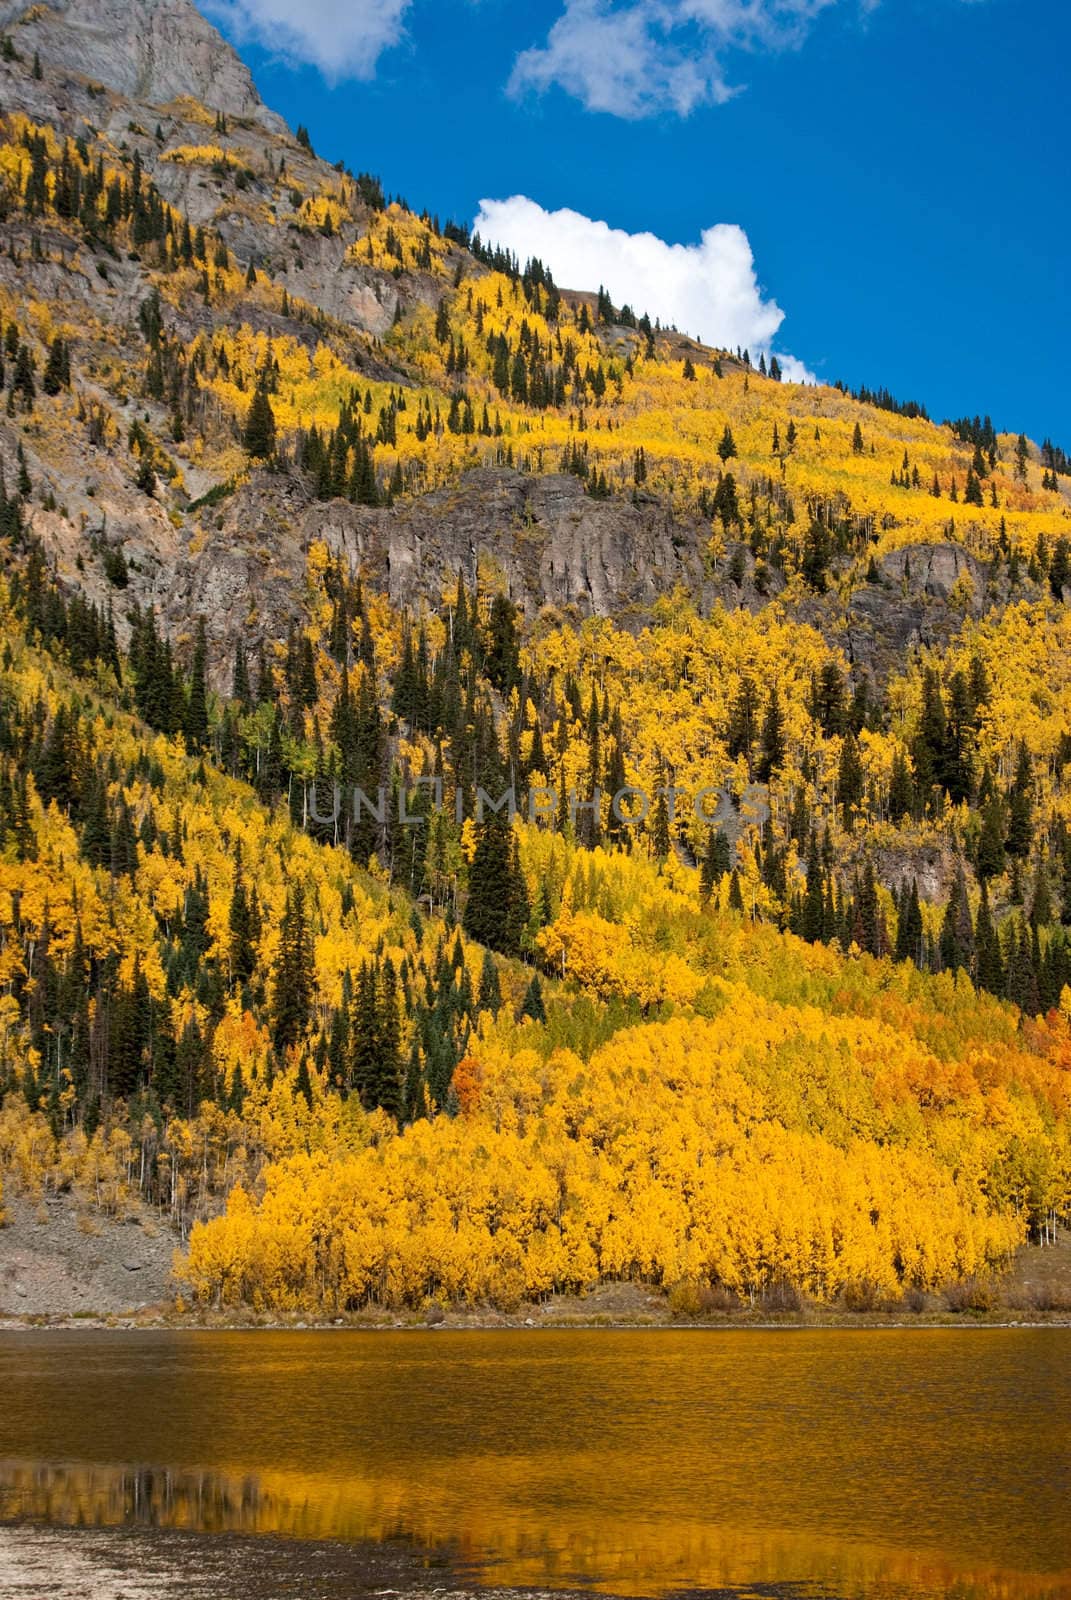 Scenic Fall colors of Colorado mountain lake